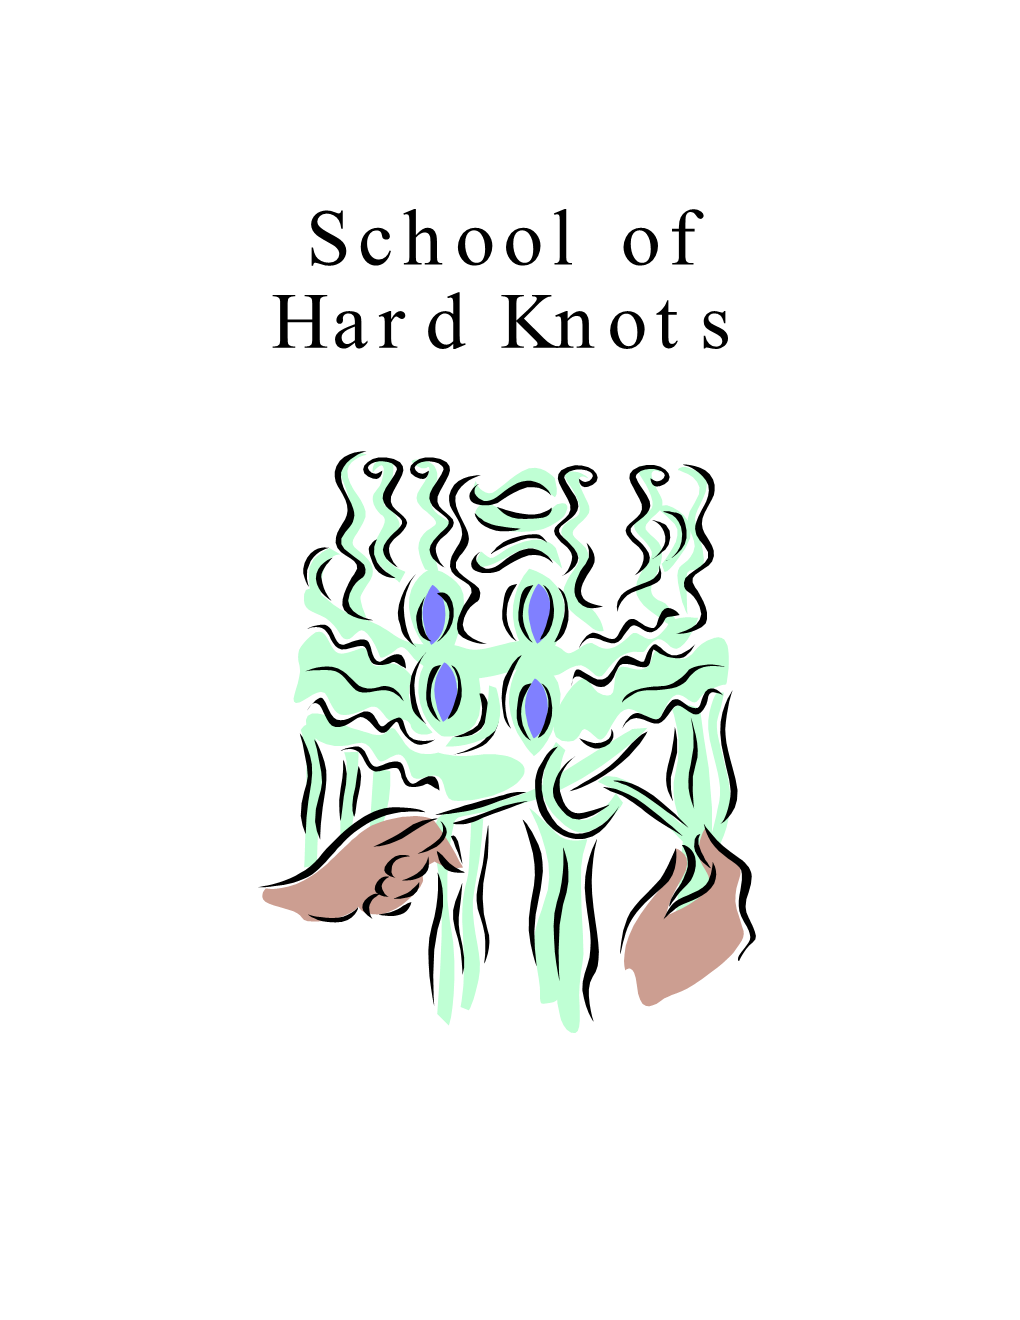 School of Hard Knots